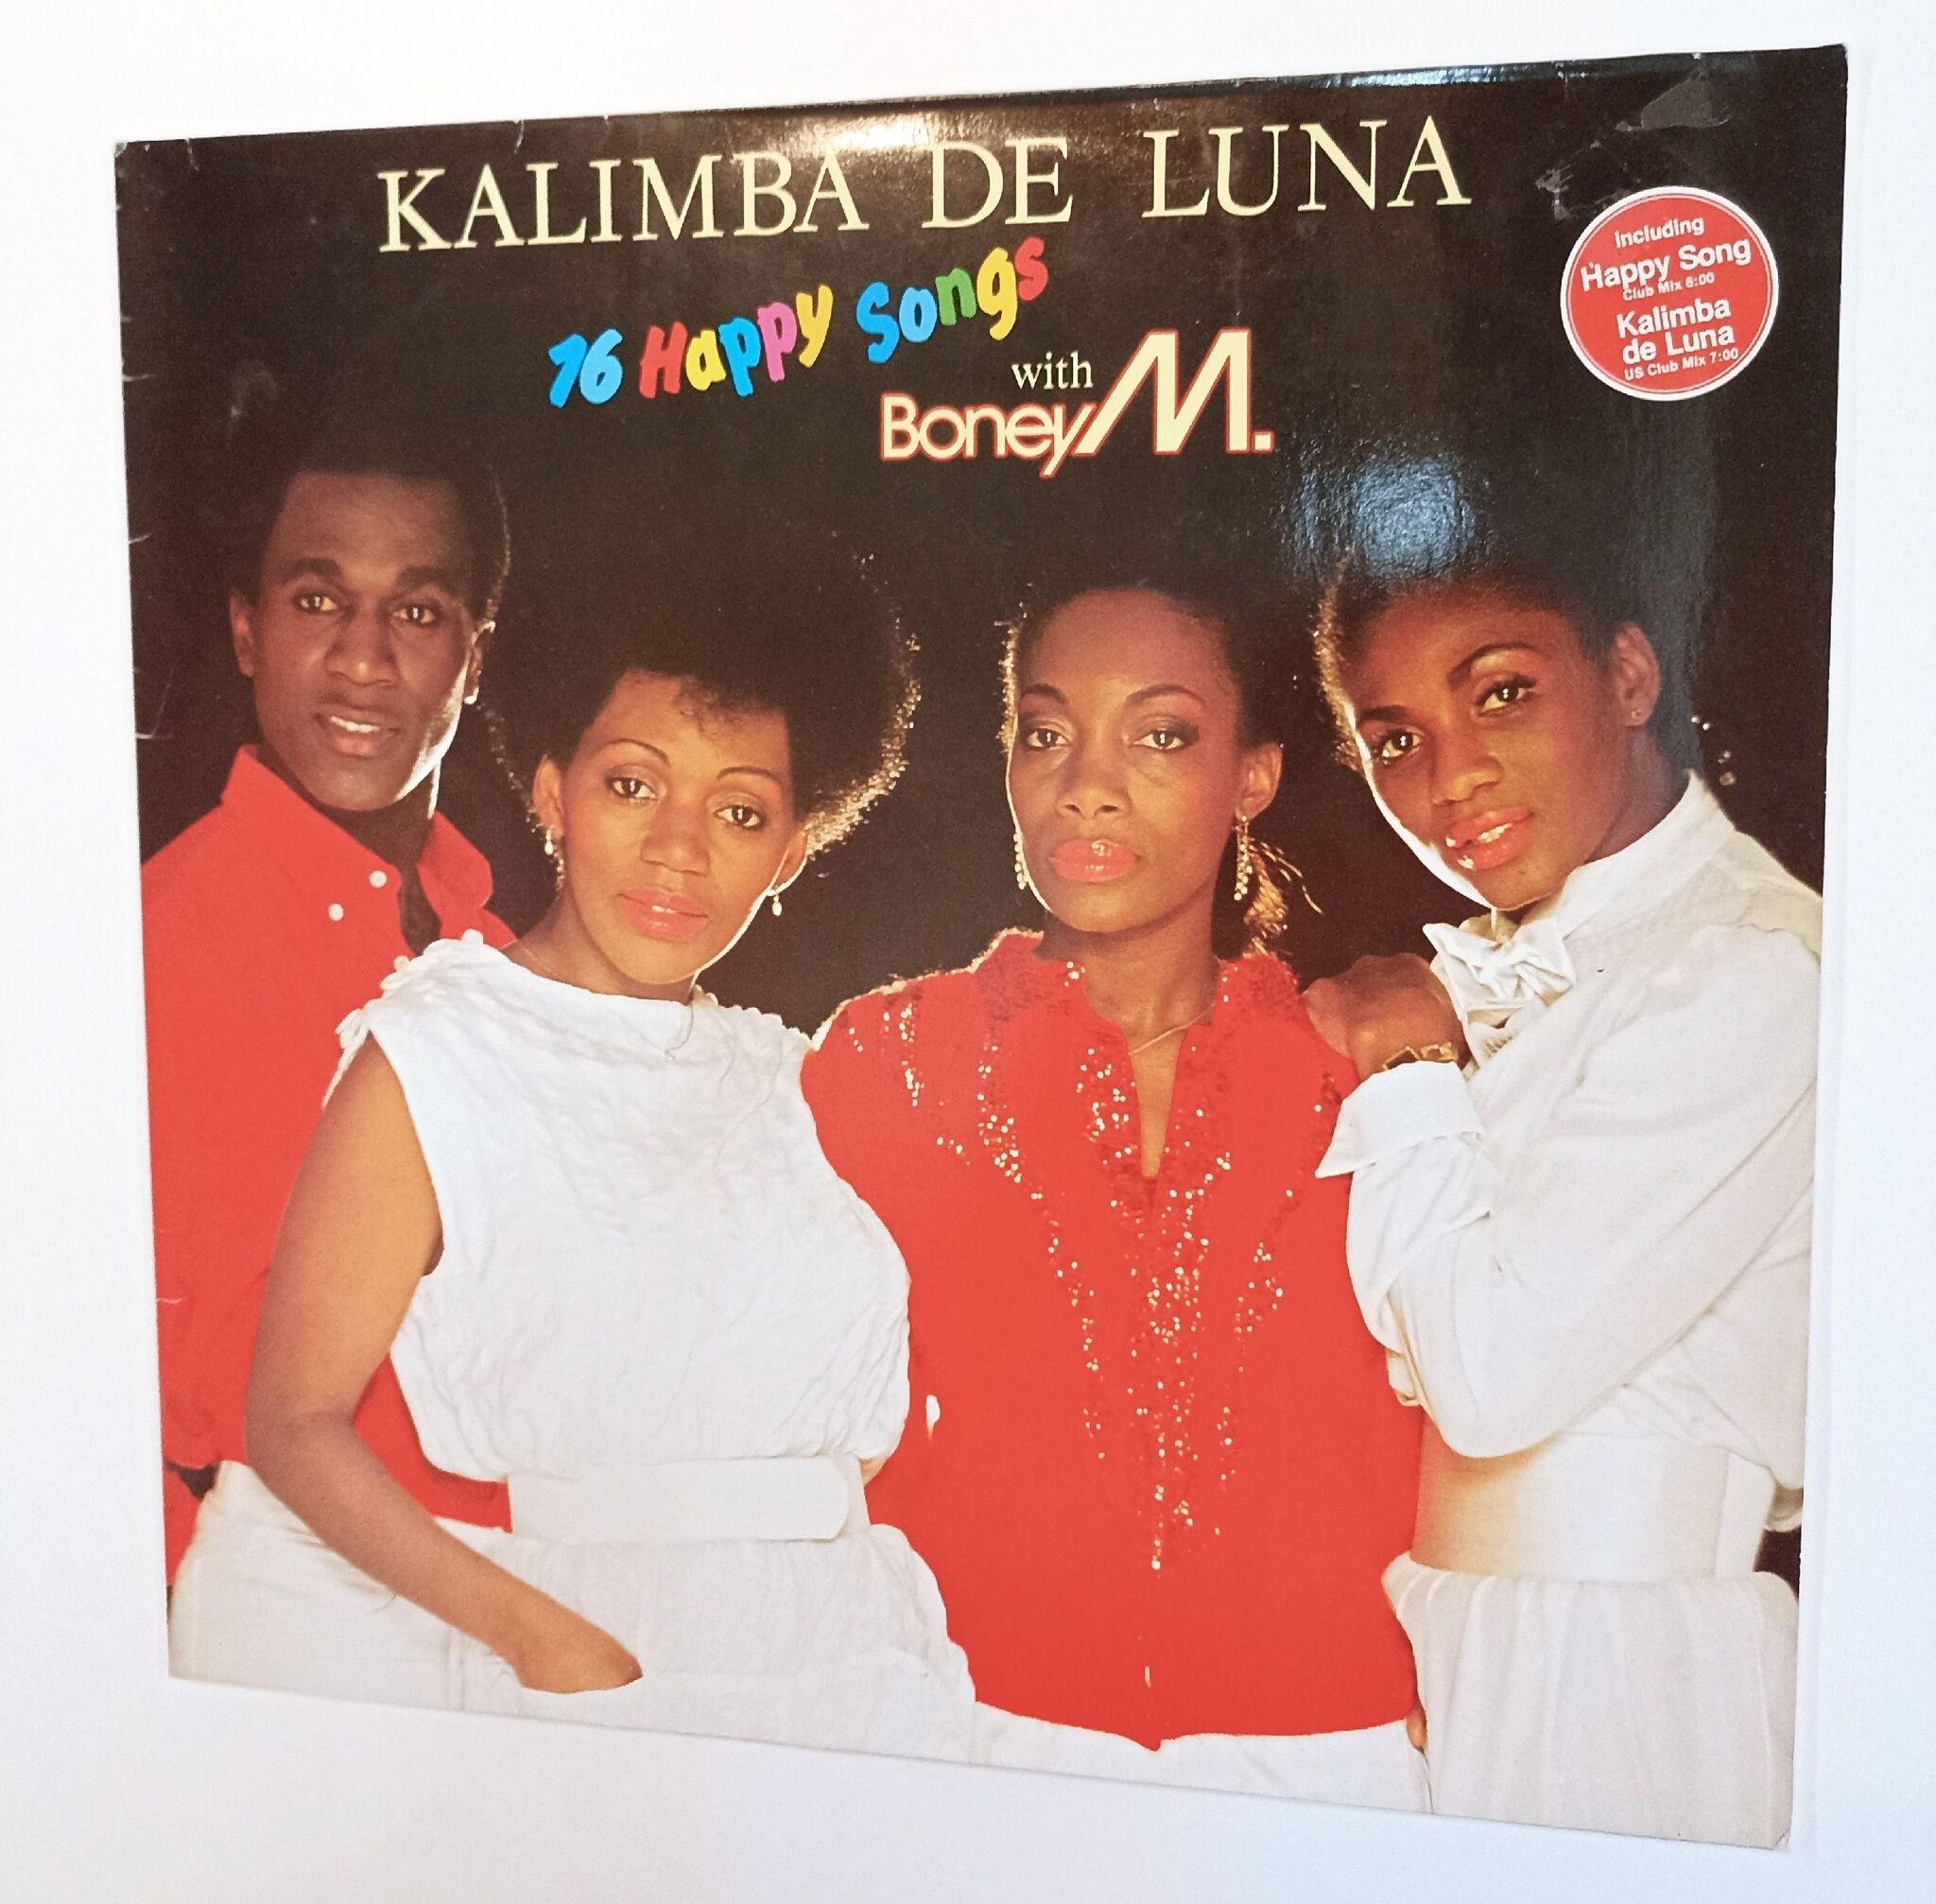 Boney m "Kalimba de Luna". Kalimba de Luna – 16 Happy Songs Boney m.. Kalimba de Luna – 16 Happy Songs Boney m. сони Рекордс. Boney m Kalimba de Luna фото. Boney m kalimba de